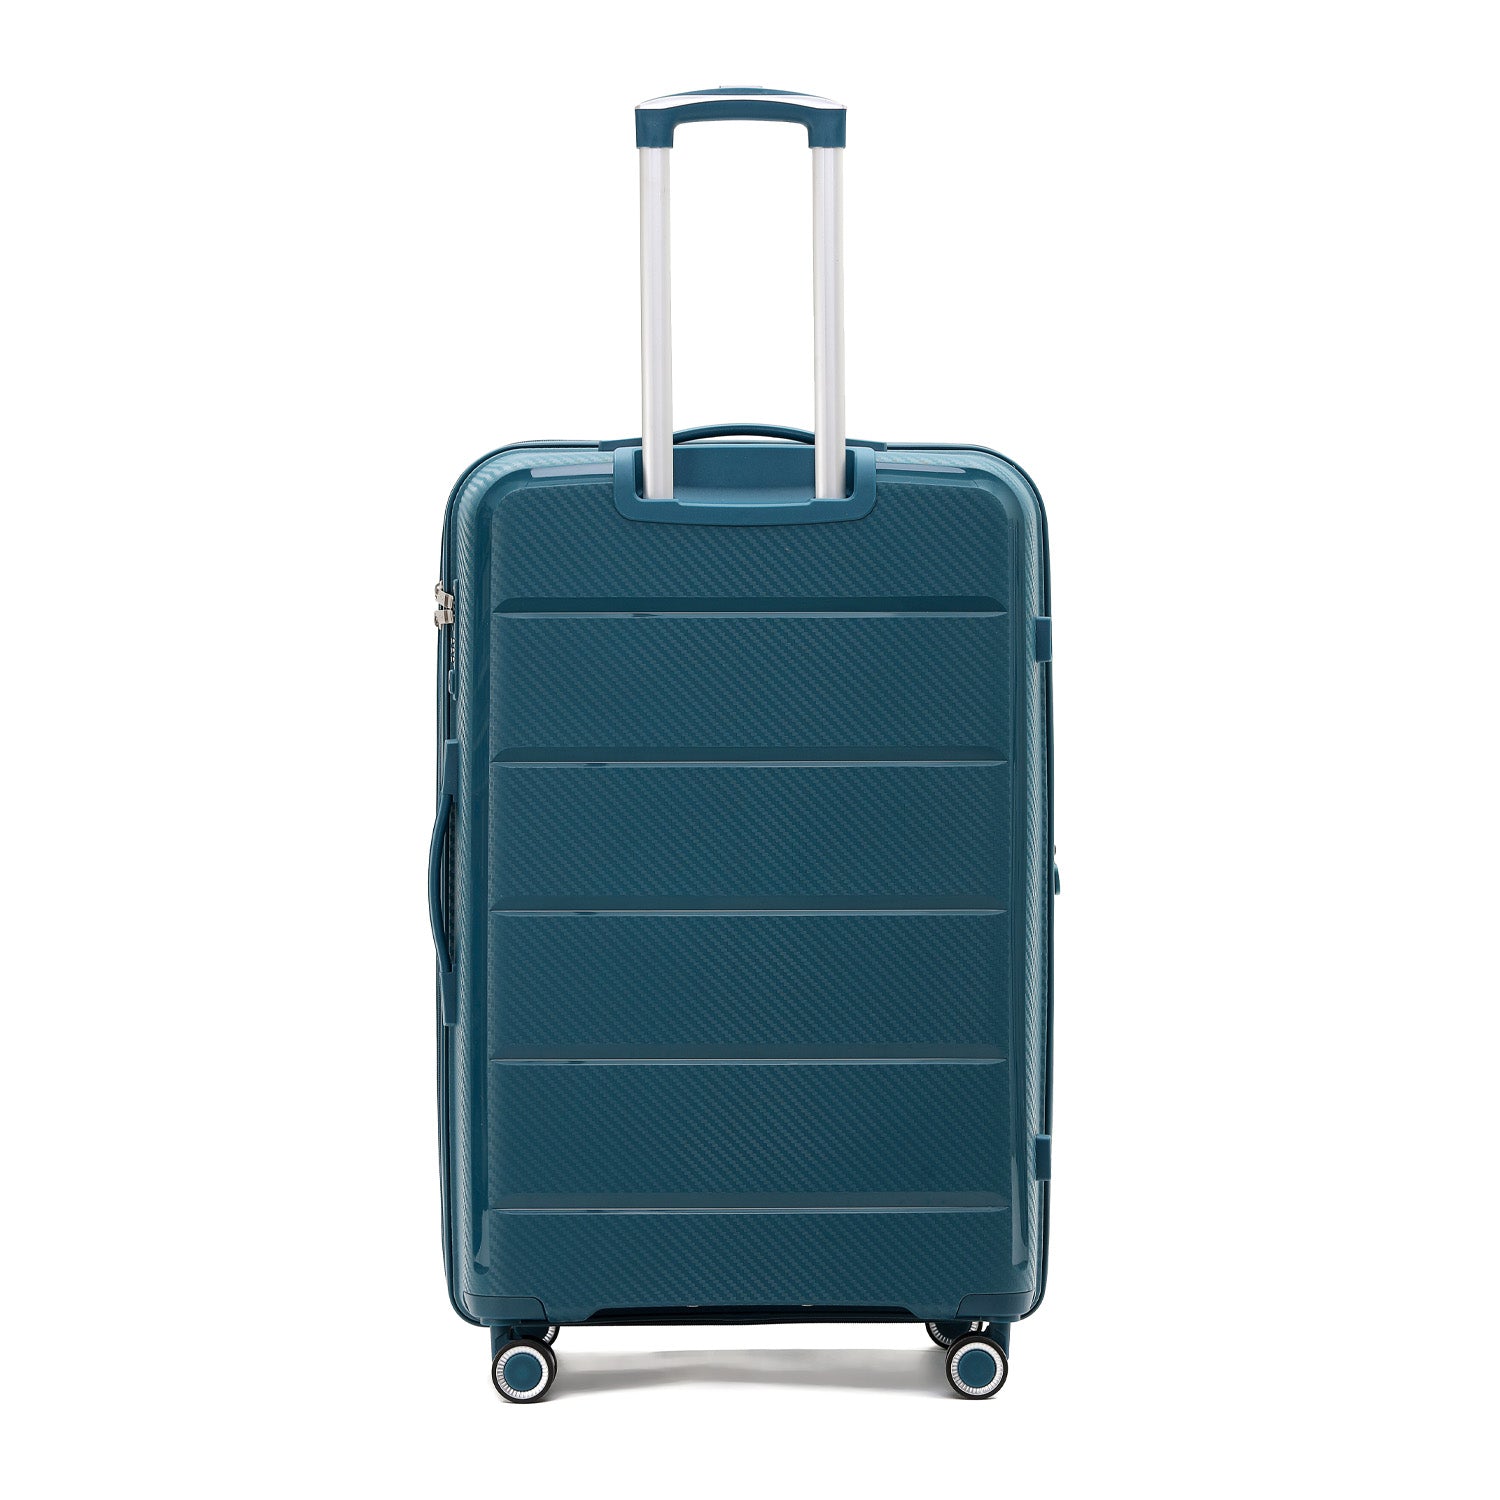 Paklite - PA7350 Large 75cm spinner suitcase - Blue - 0